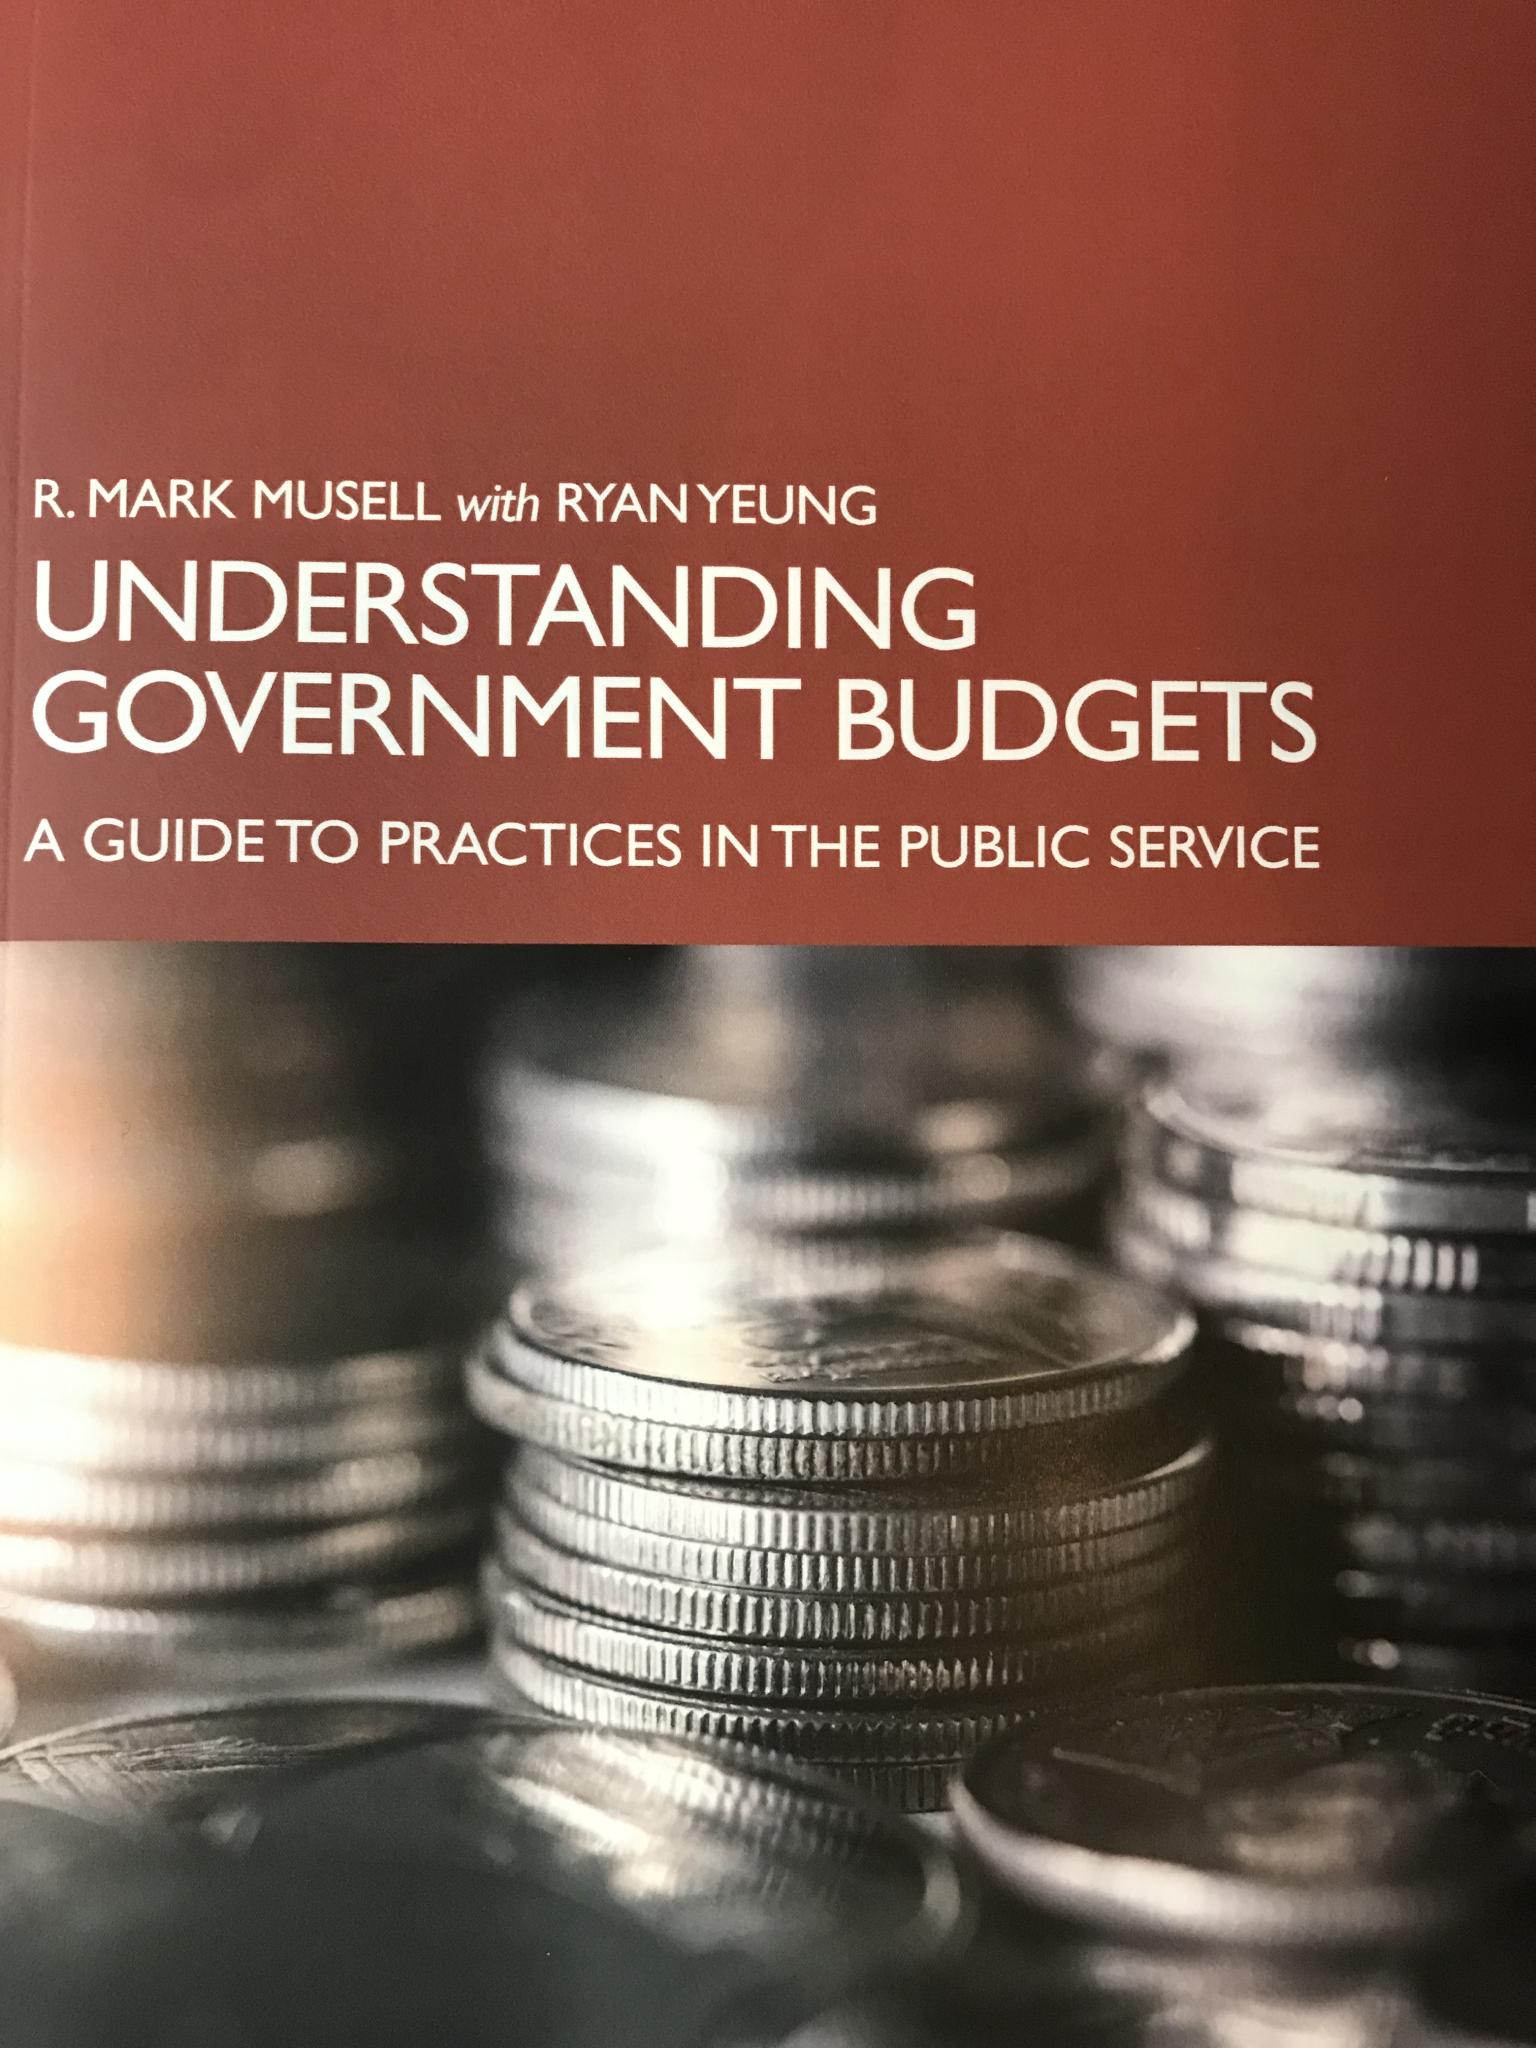 Government budget.